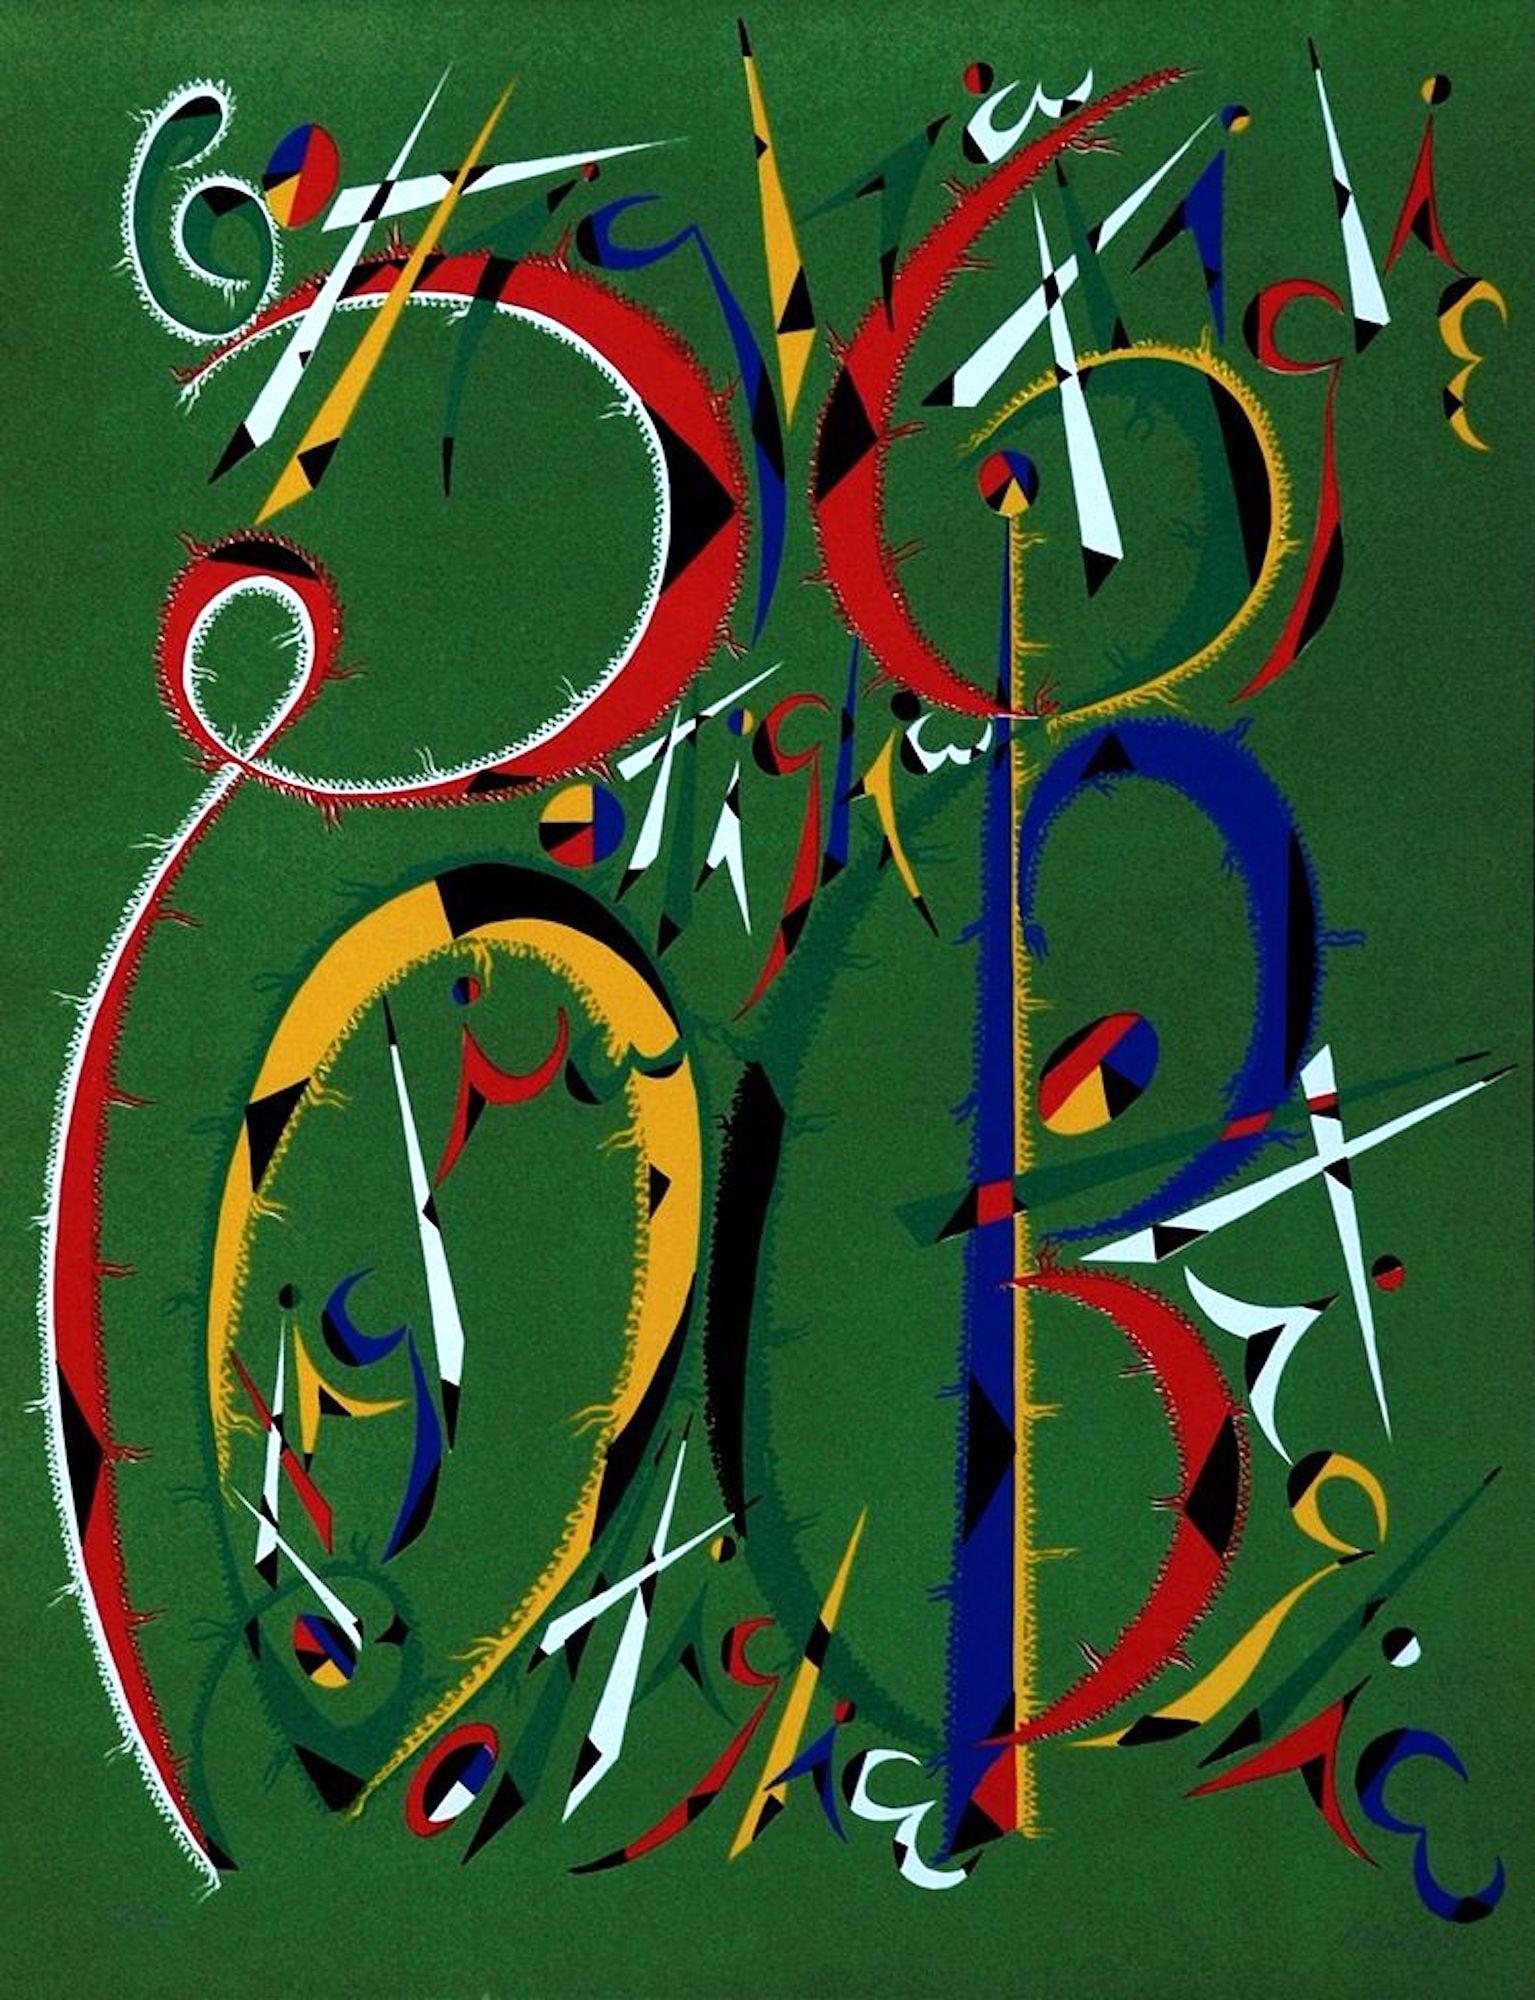 Rafael Alberti Figurative Print - Letter B -Lithograph by Raphael Alberti - 1972